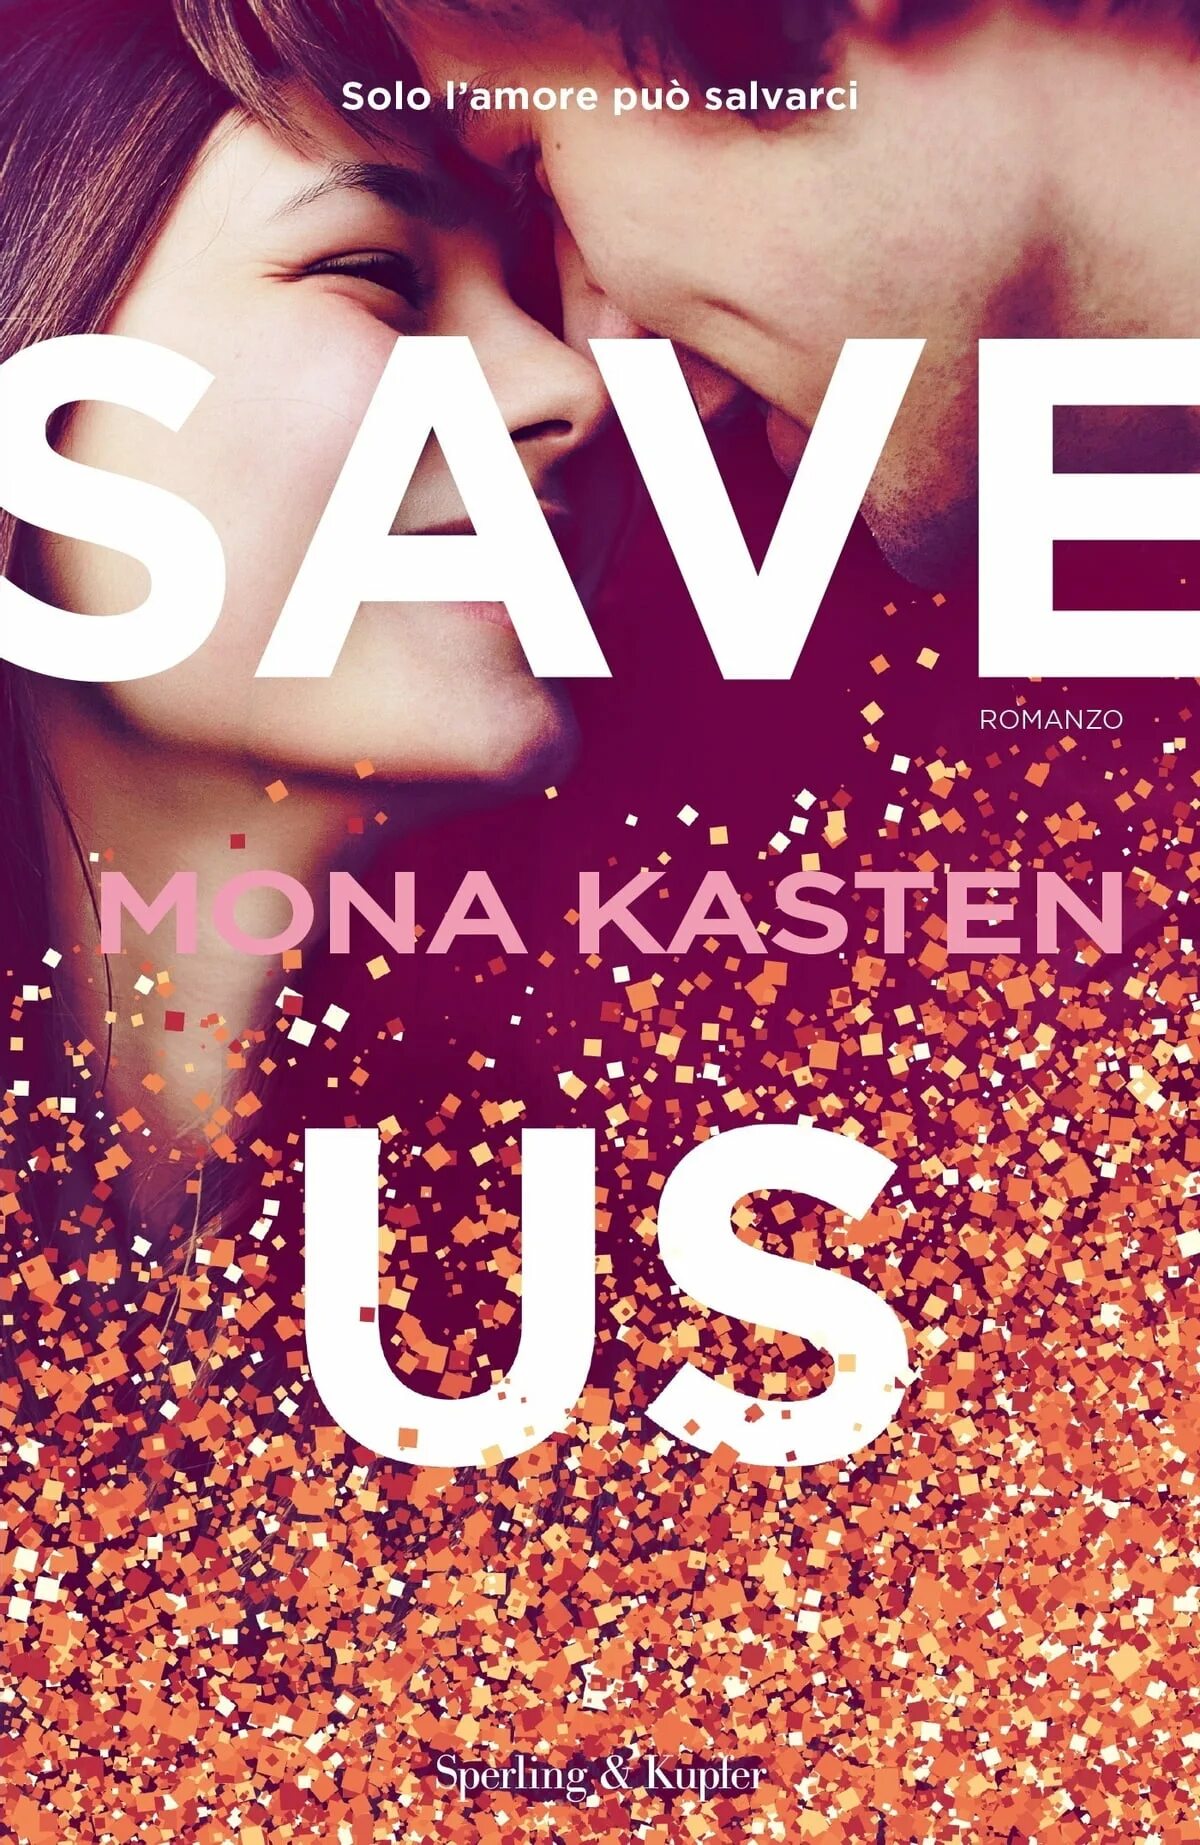 Мона Кастен книги. Save me книга Мона Кастен. Save us Мона Кастен. Save me книга.